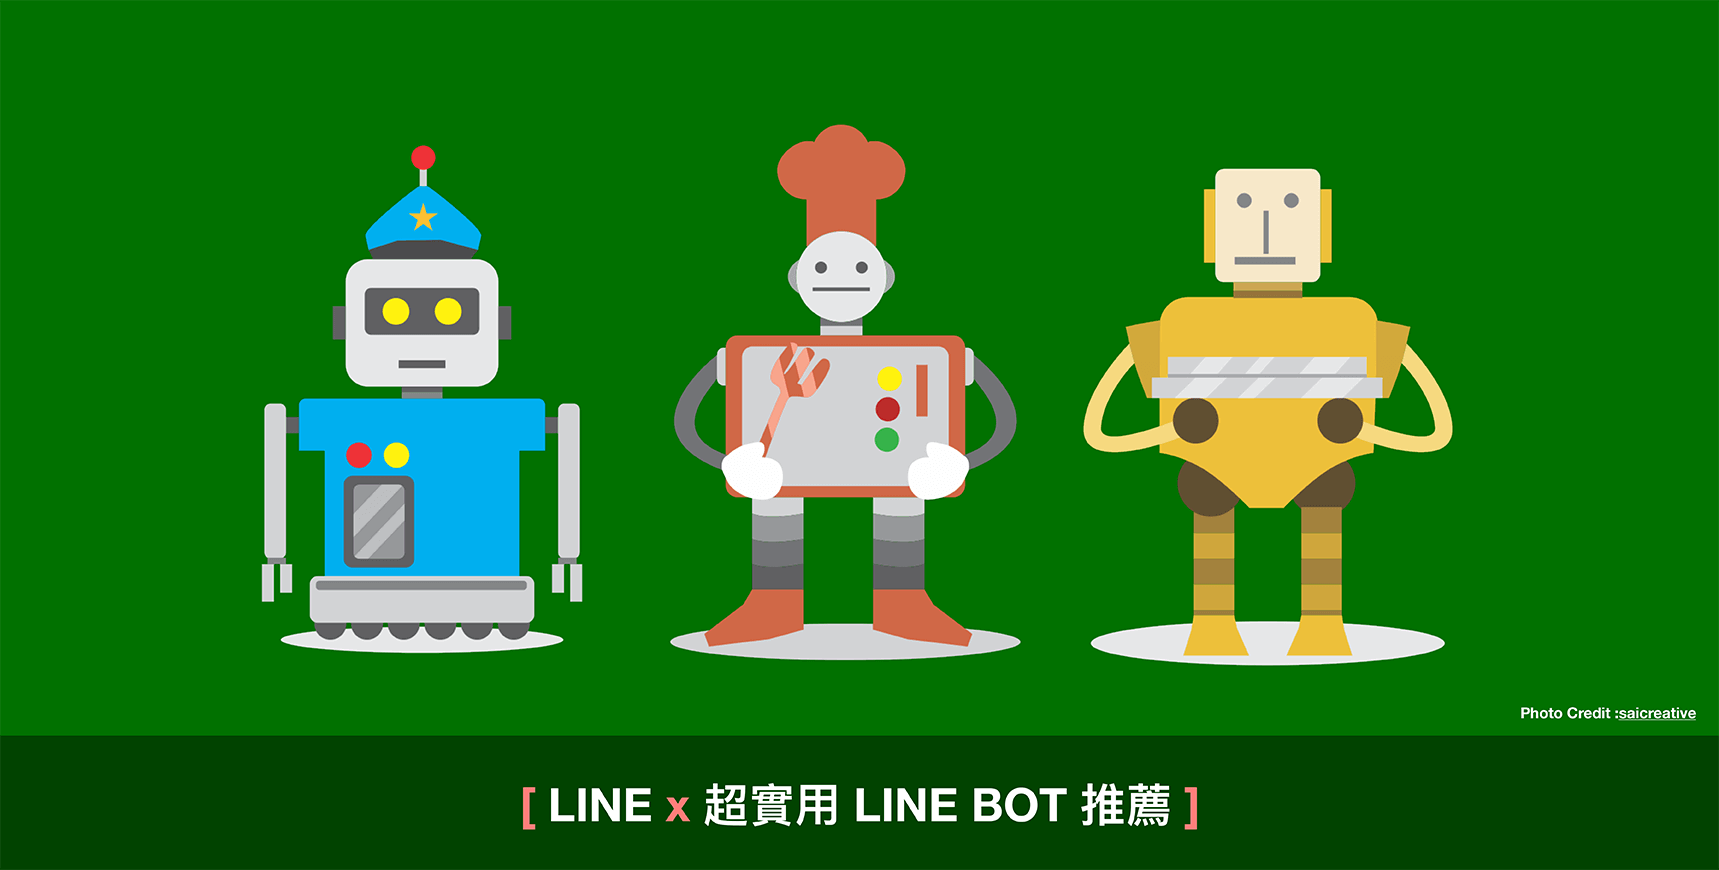 Line Bot Archives Ispot X Talks